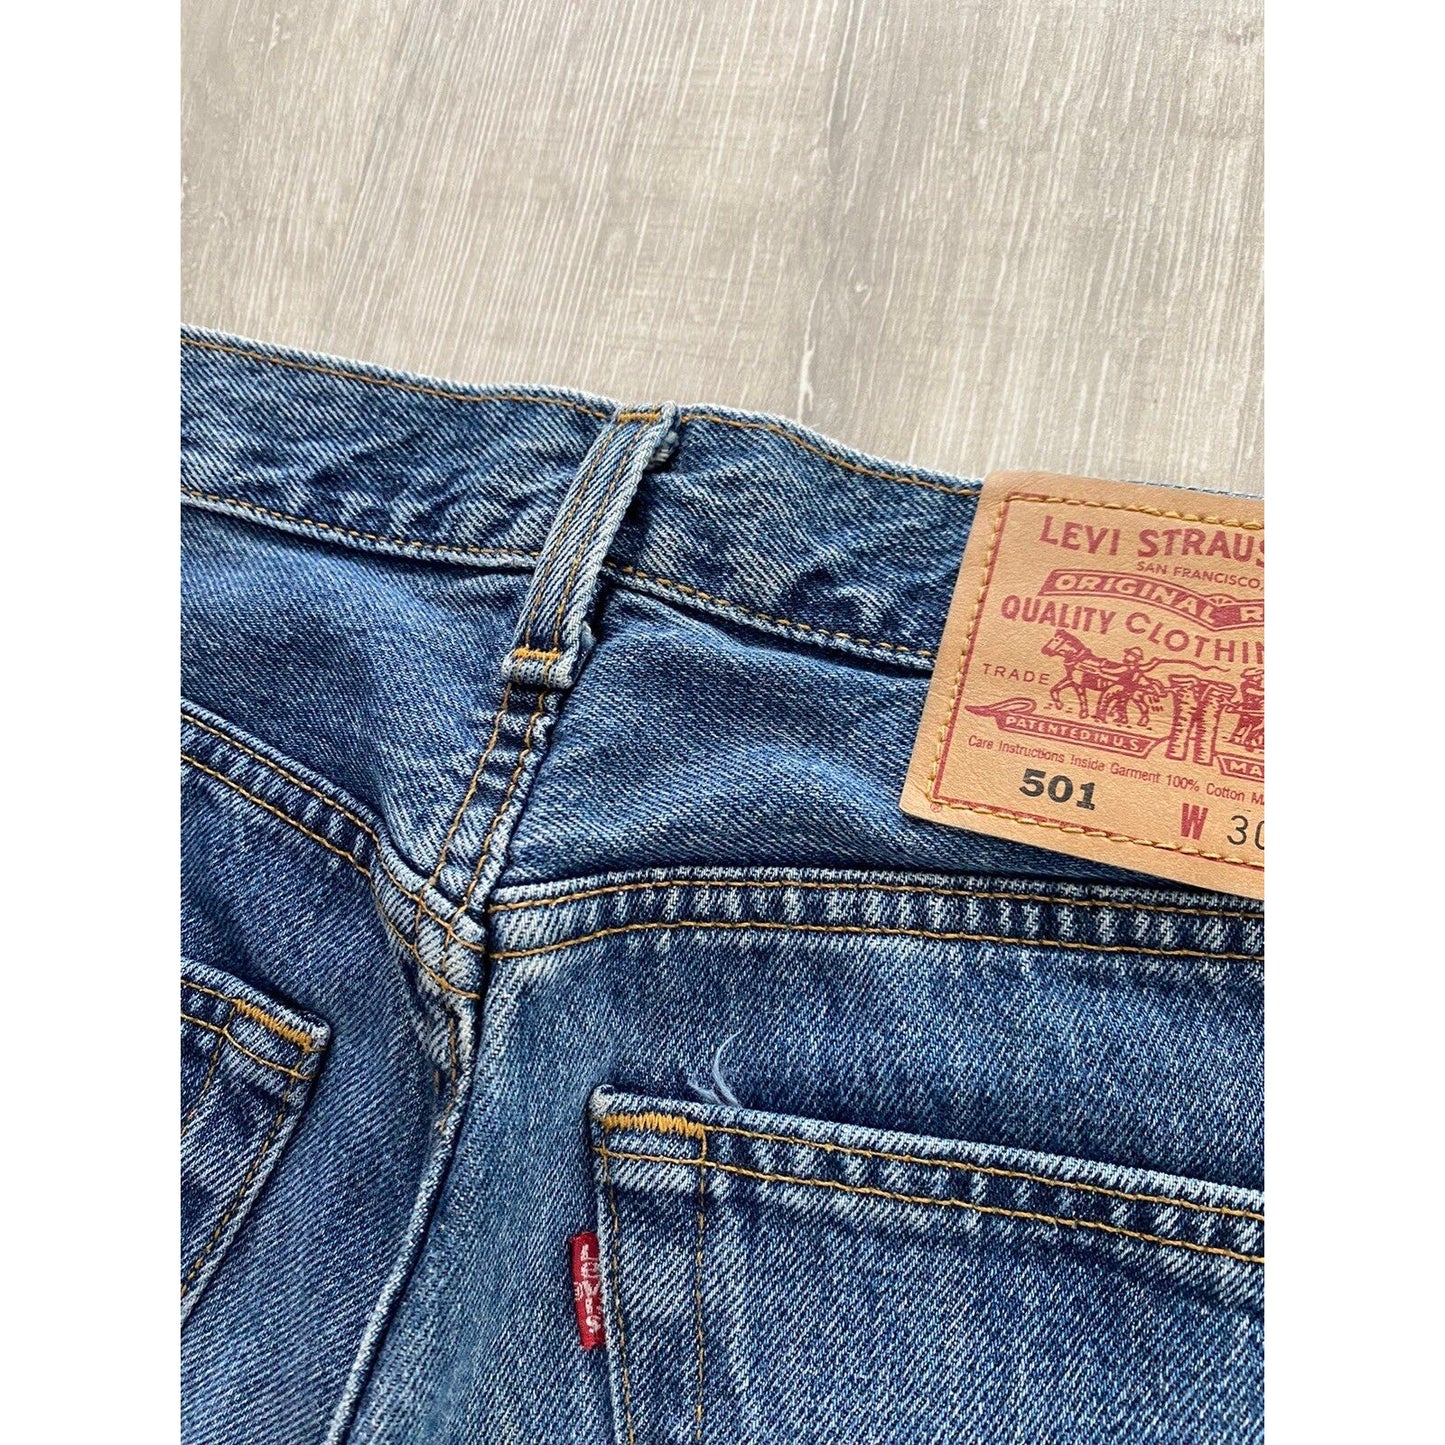 Levi’s 501 vintage denim shorts blue navy jeans jorts made in USA